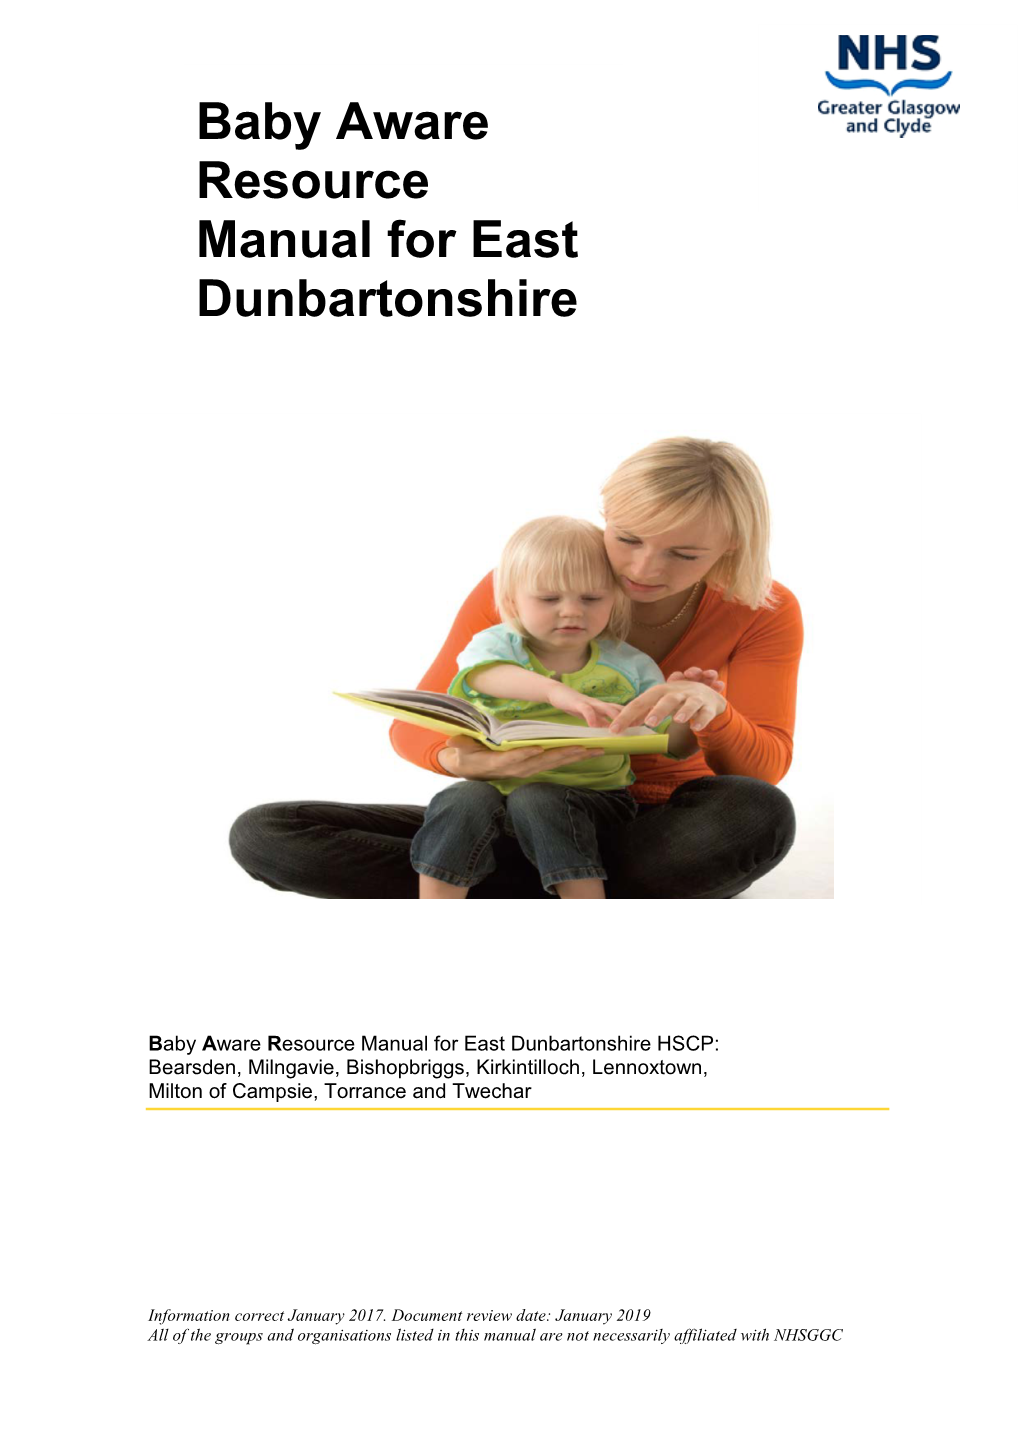 Baby Aware Resource Manual for East Dunbartonshire HSCP: Bearsden, Milngavie, Bishopbriggs, Kirkintilloch, Lennoxtown, Milton of Campsie, Torrance and Twechar